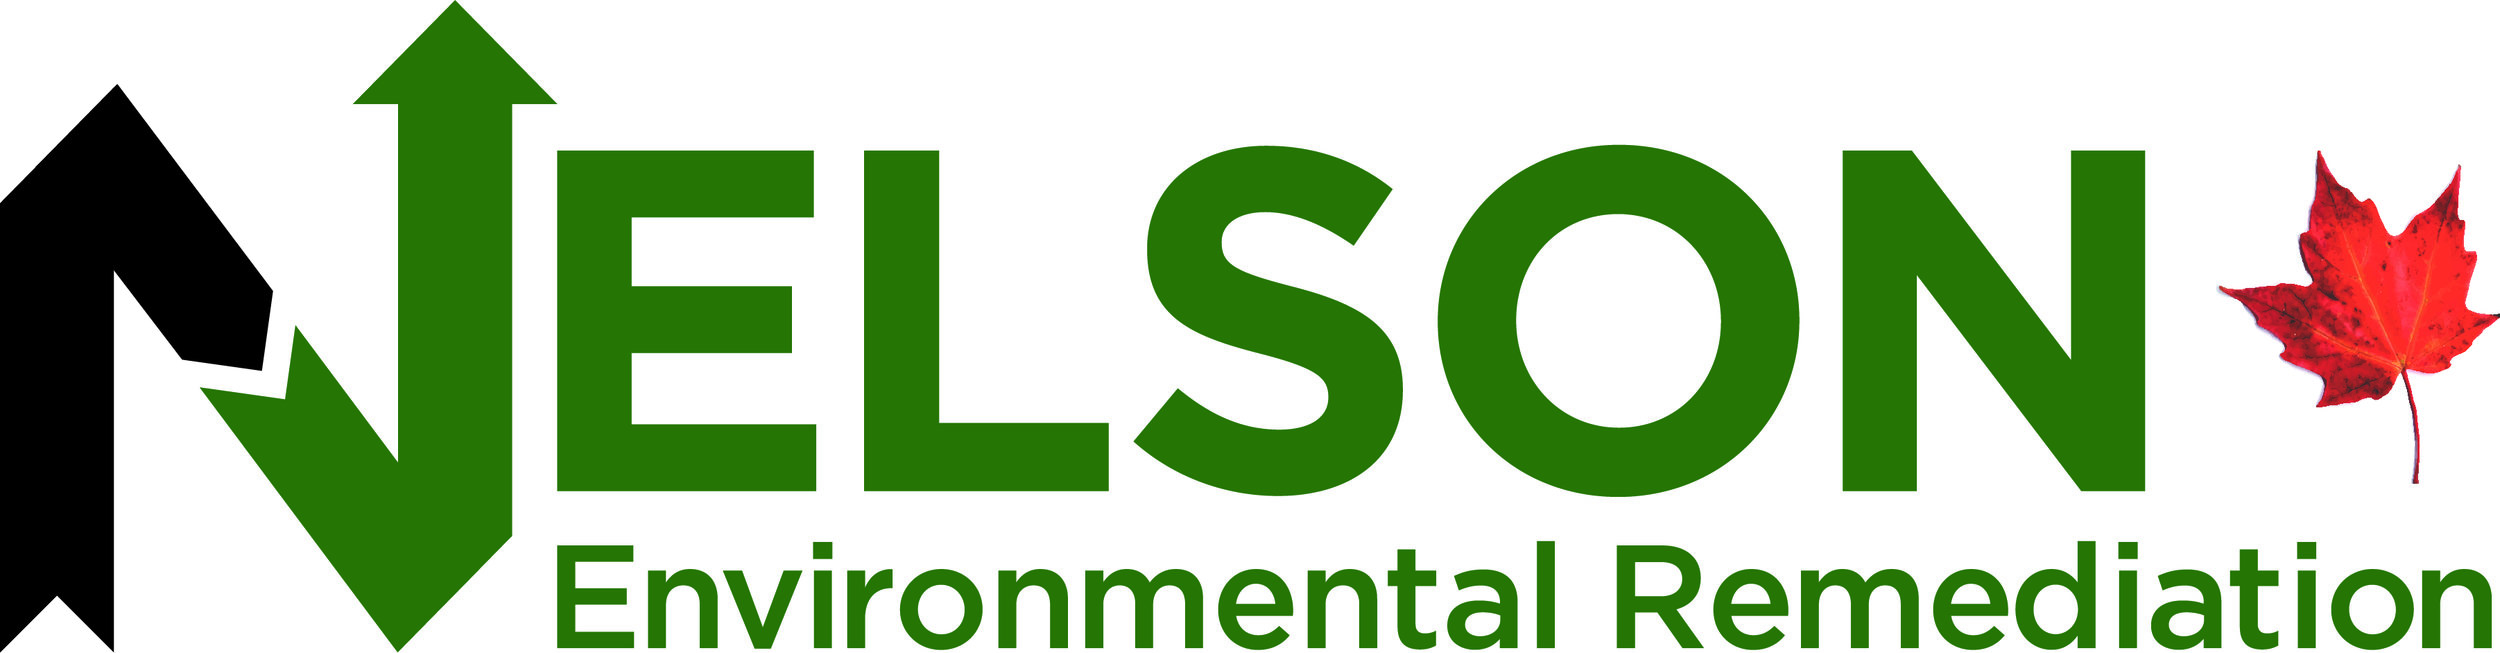 Nelson Environmental Remediation Logo.jpg